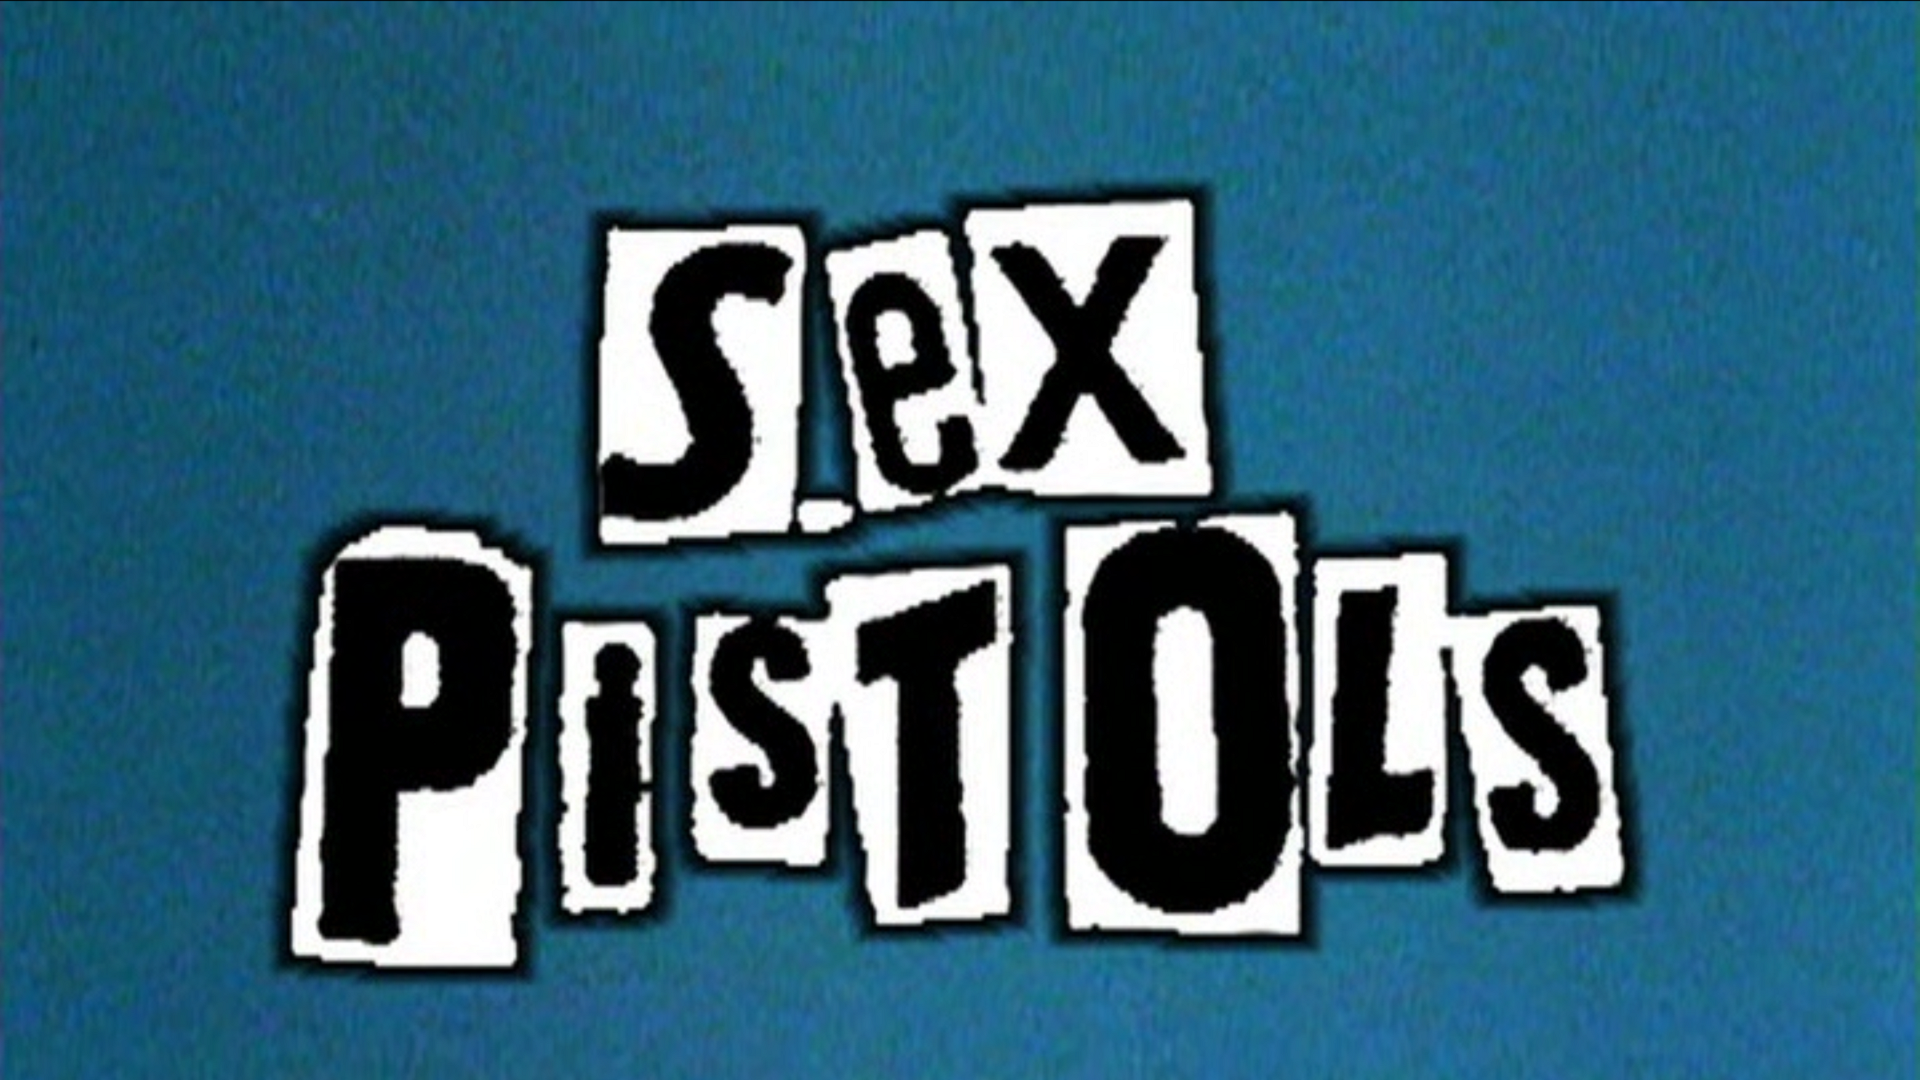 Music Sex Pistols 1920x1080